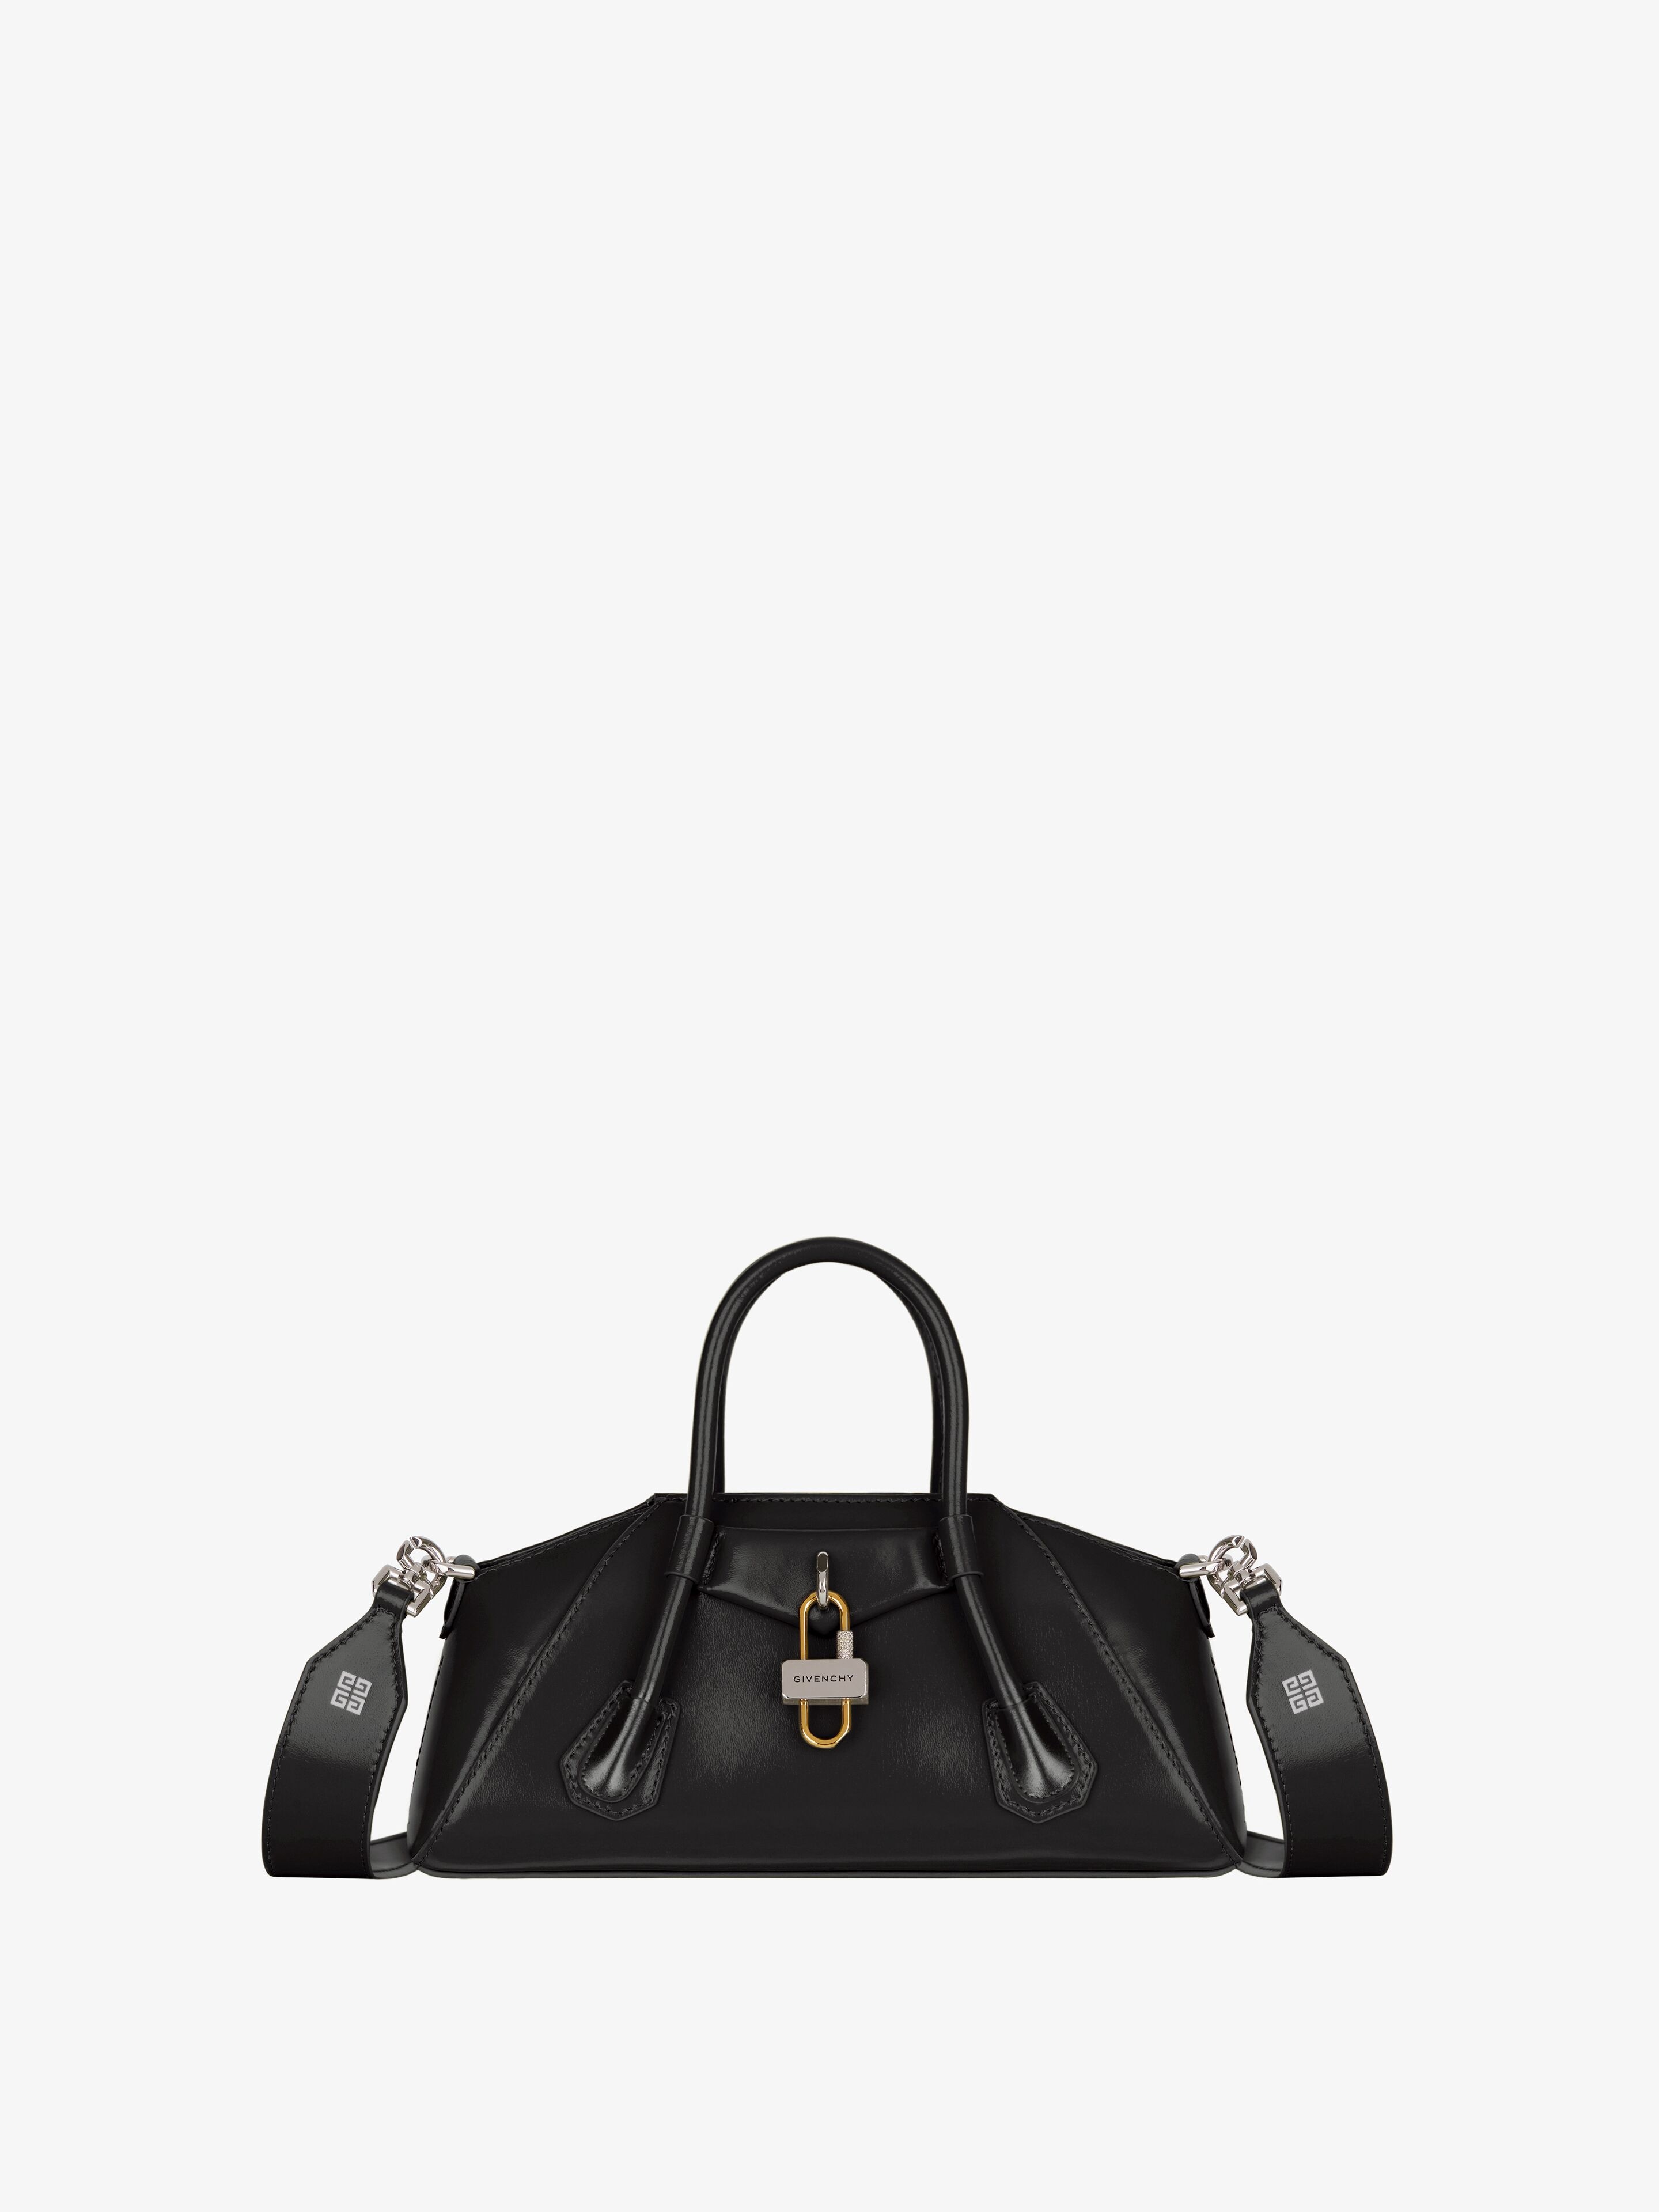 Givenchy Mini Antigona Shoulder Bag (Varied Colors)